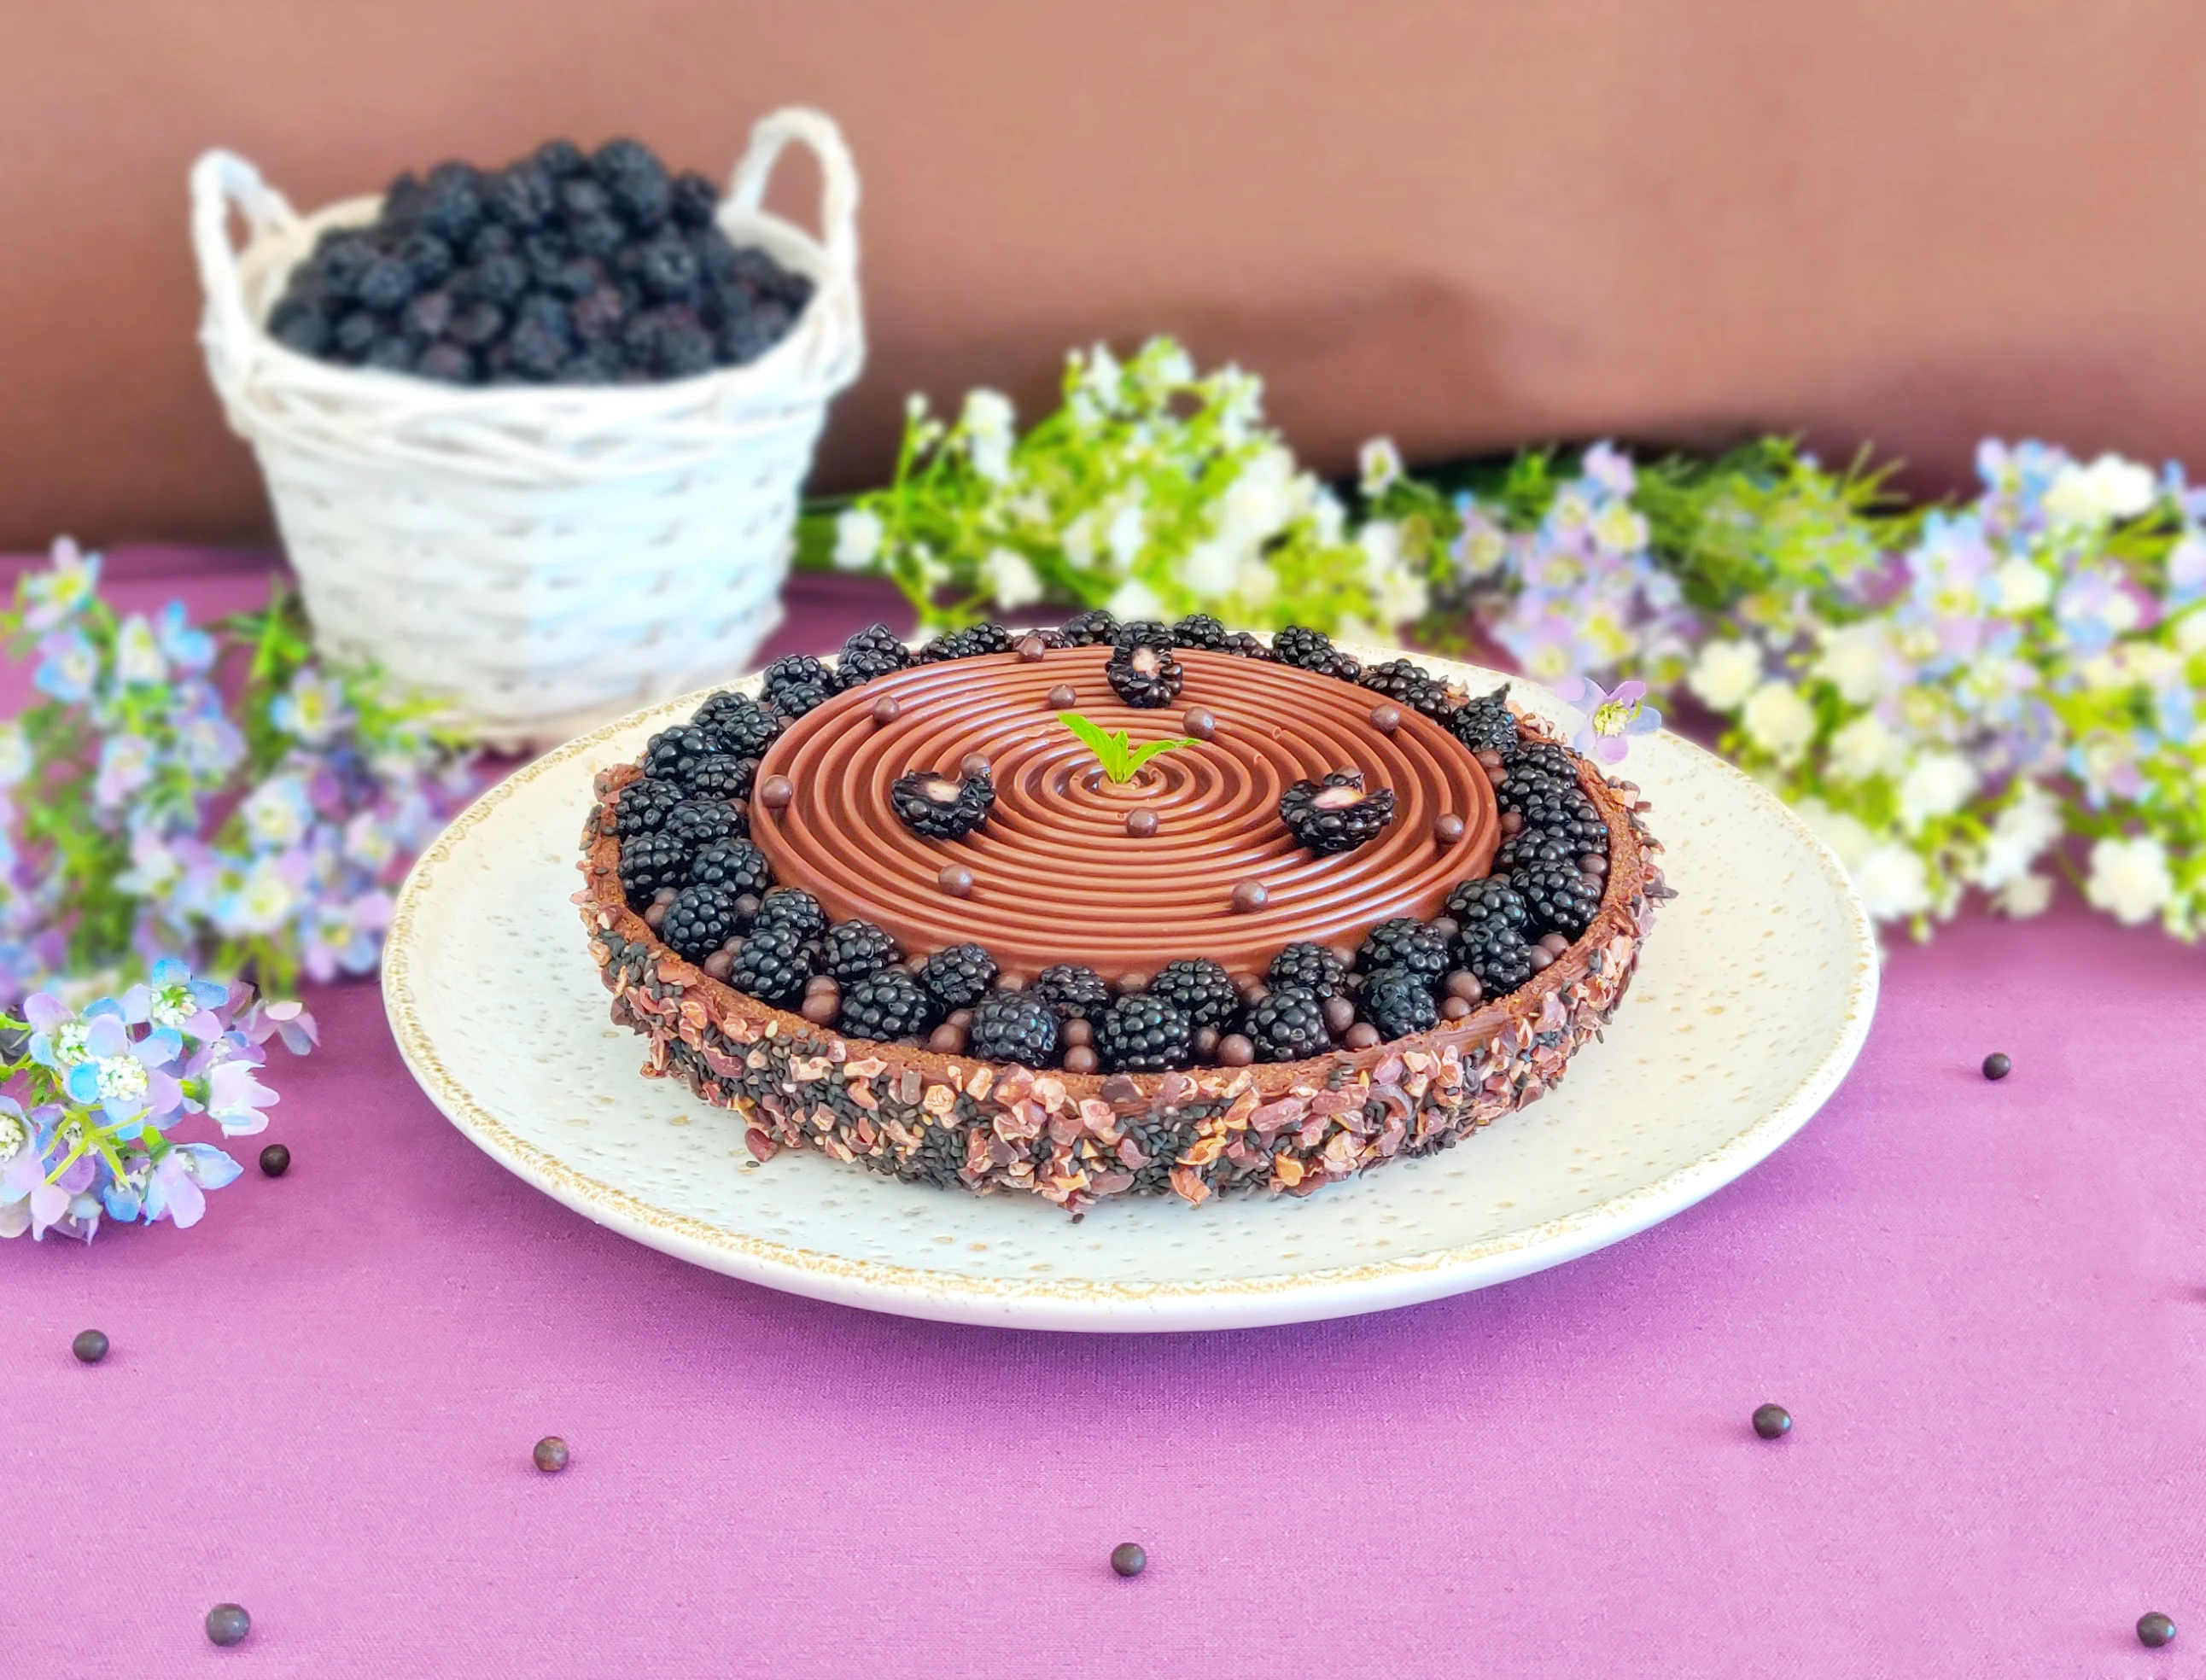 /assets/images/recipes/blackberry-sesam-chocolate-tart/1.webp